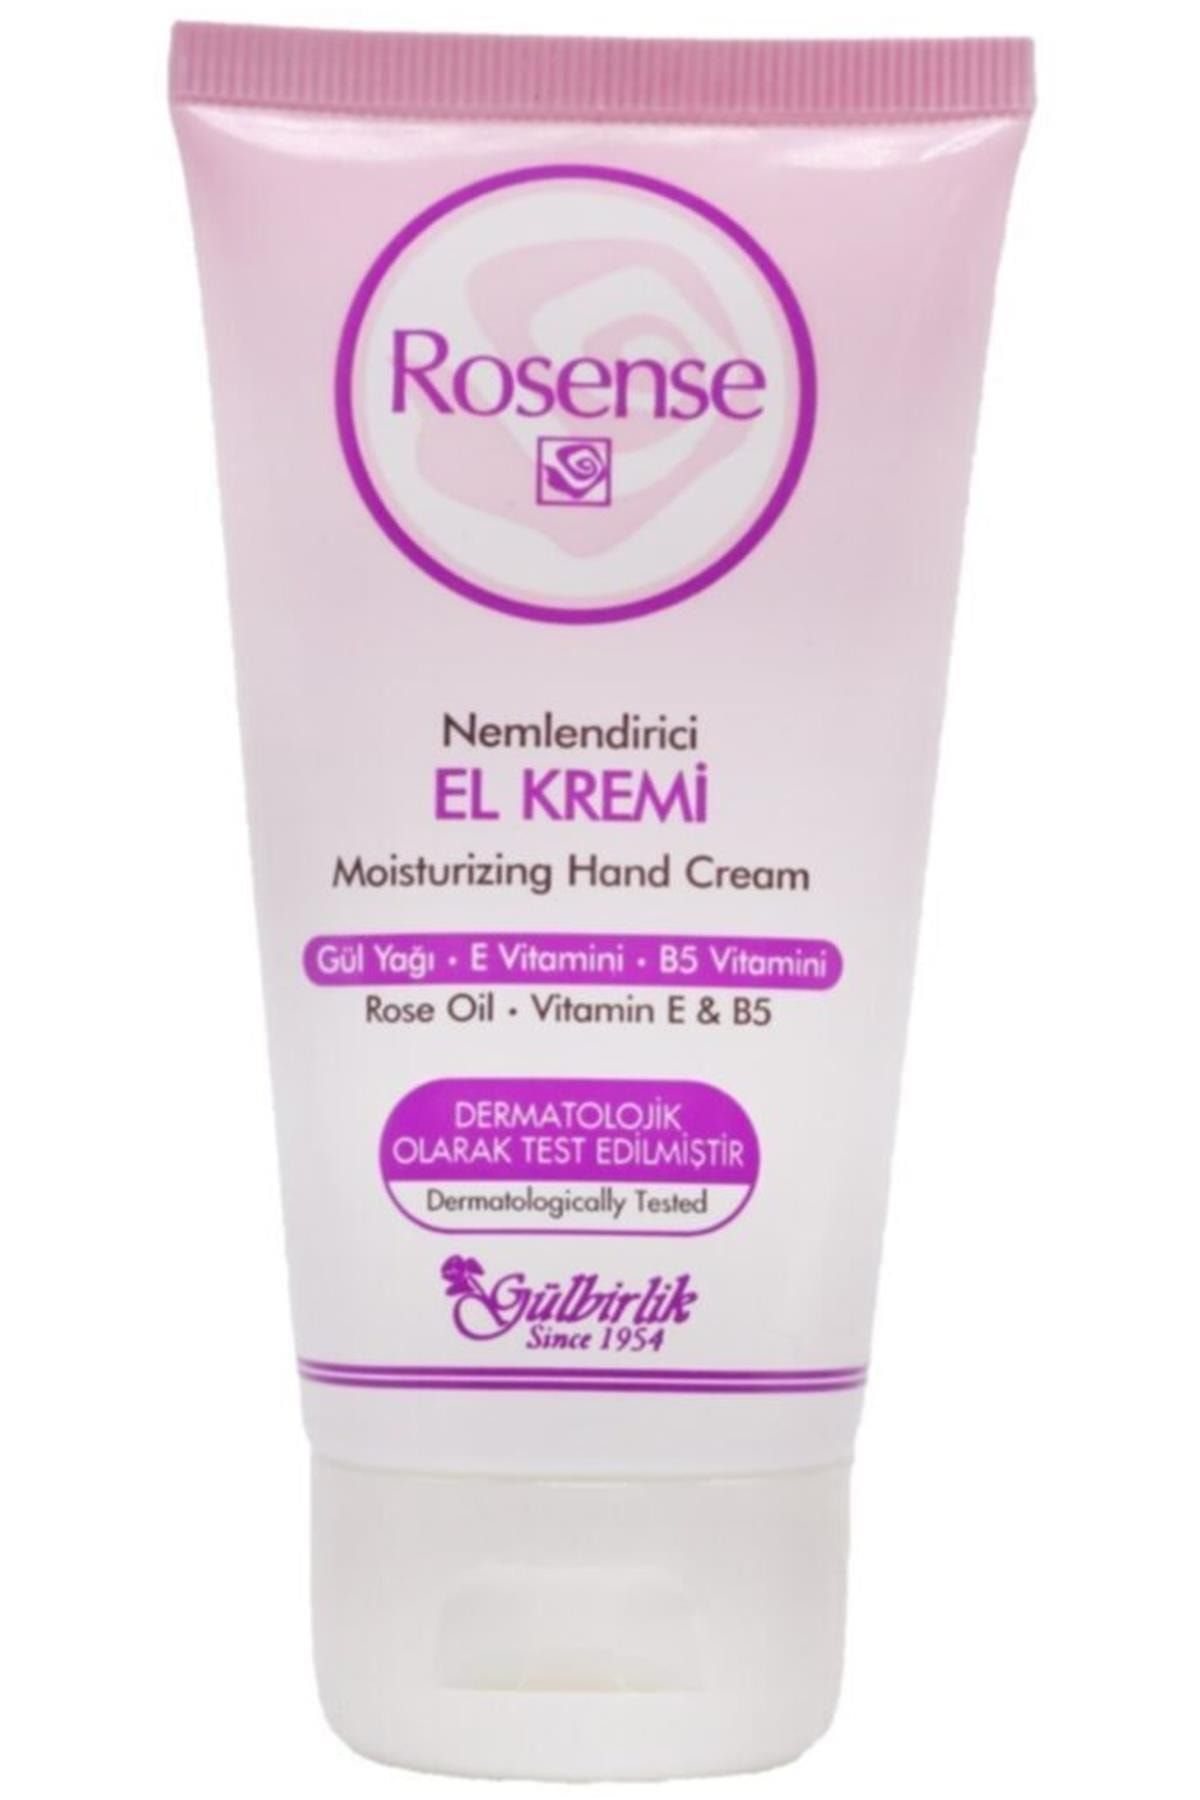 Rosense El Kremi 75 ml